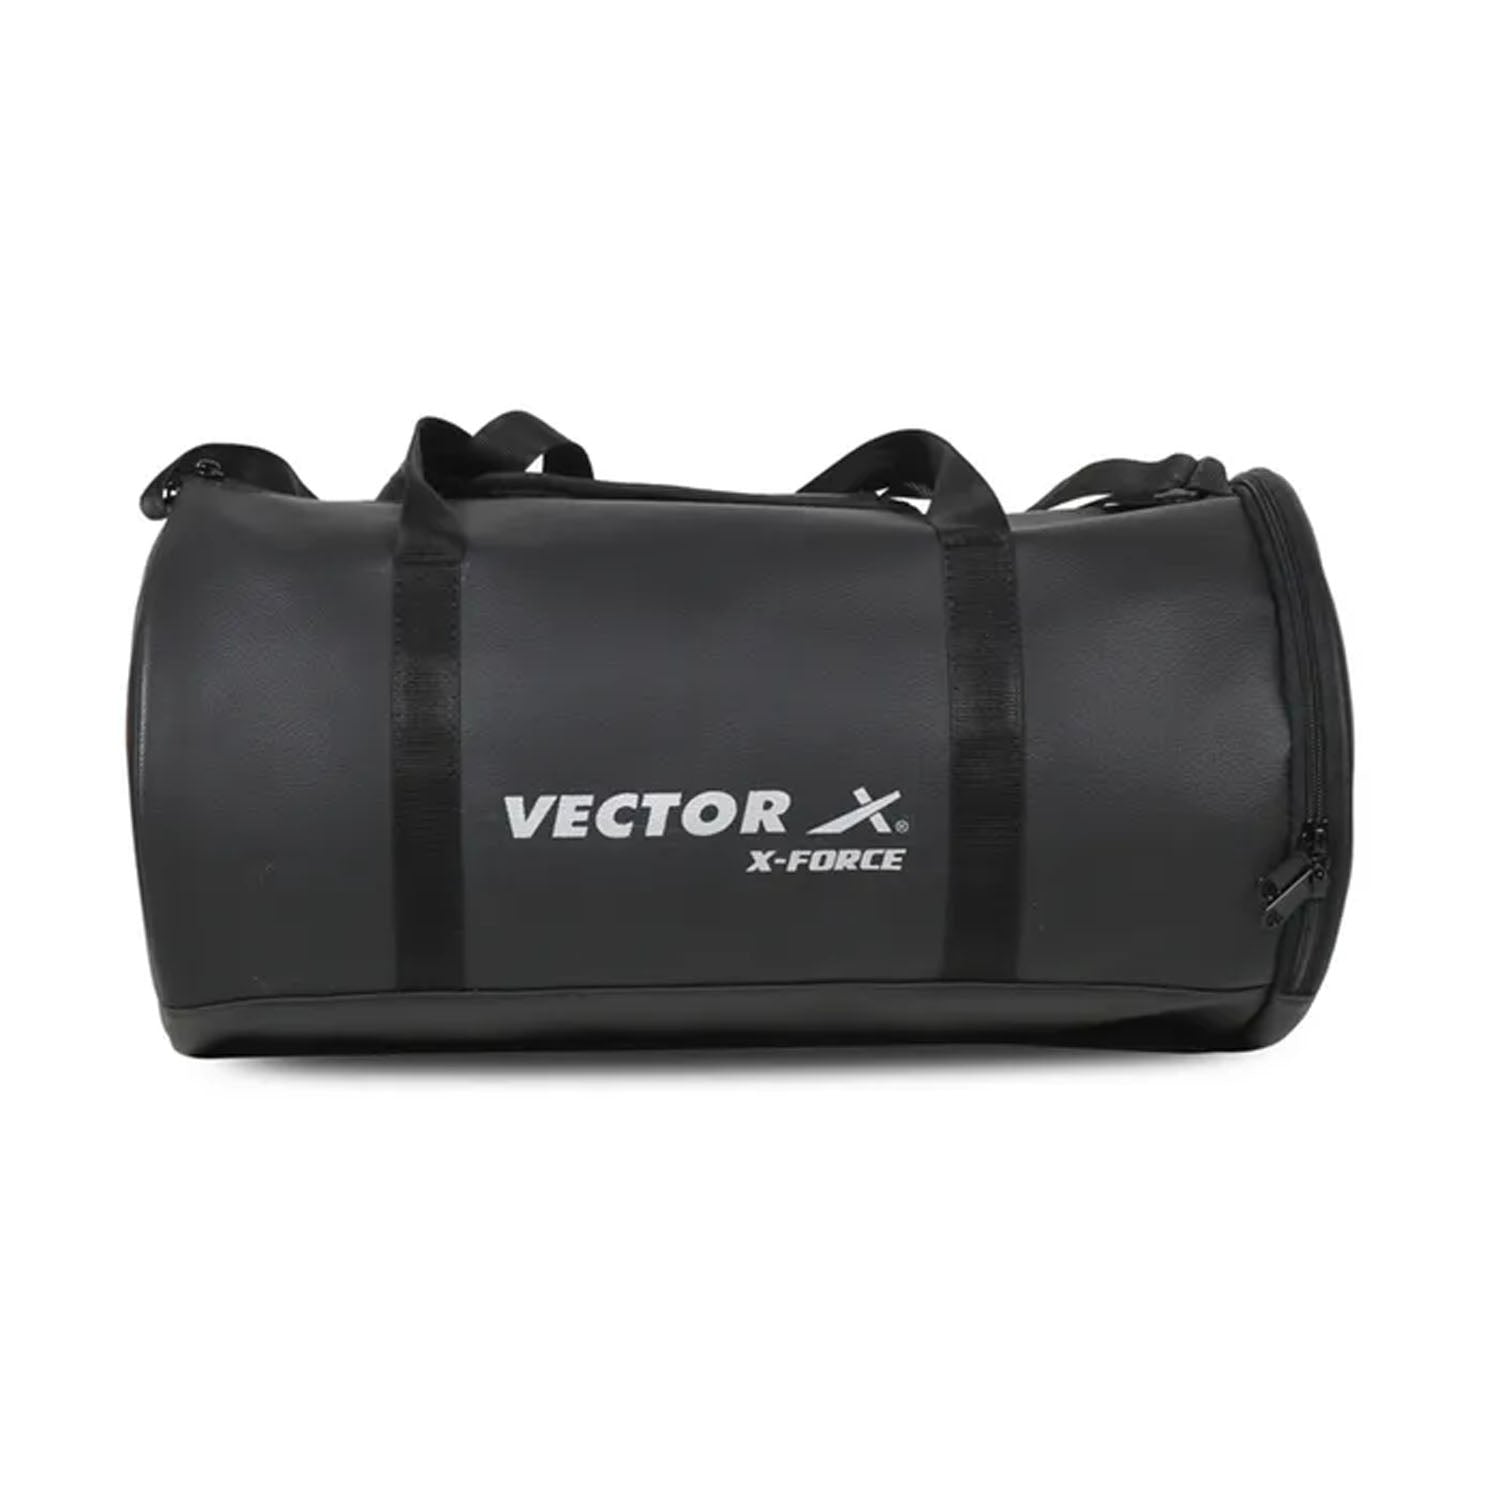 Vector X X-Force Gym Duffle Sports Bag - Best Price online Prokicksports.com